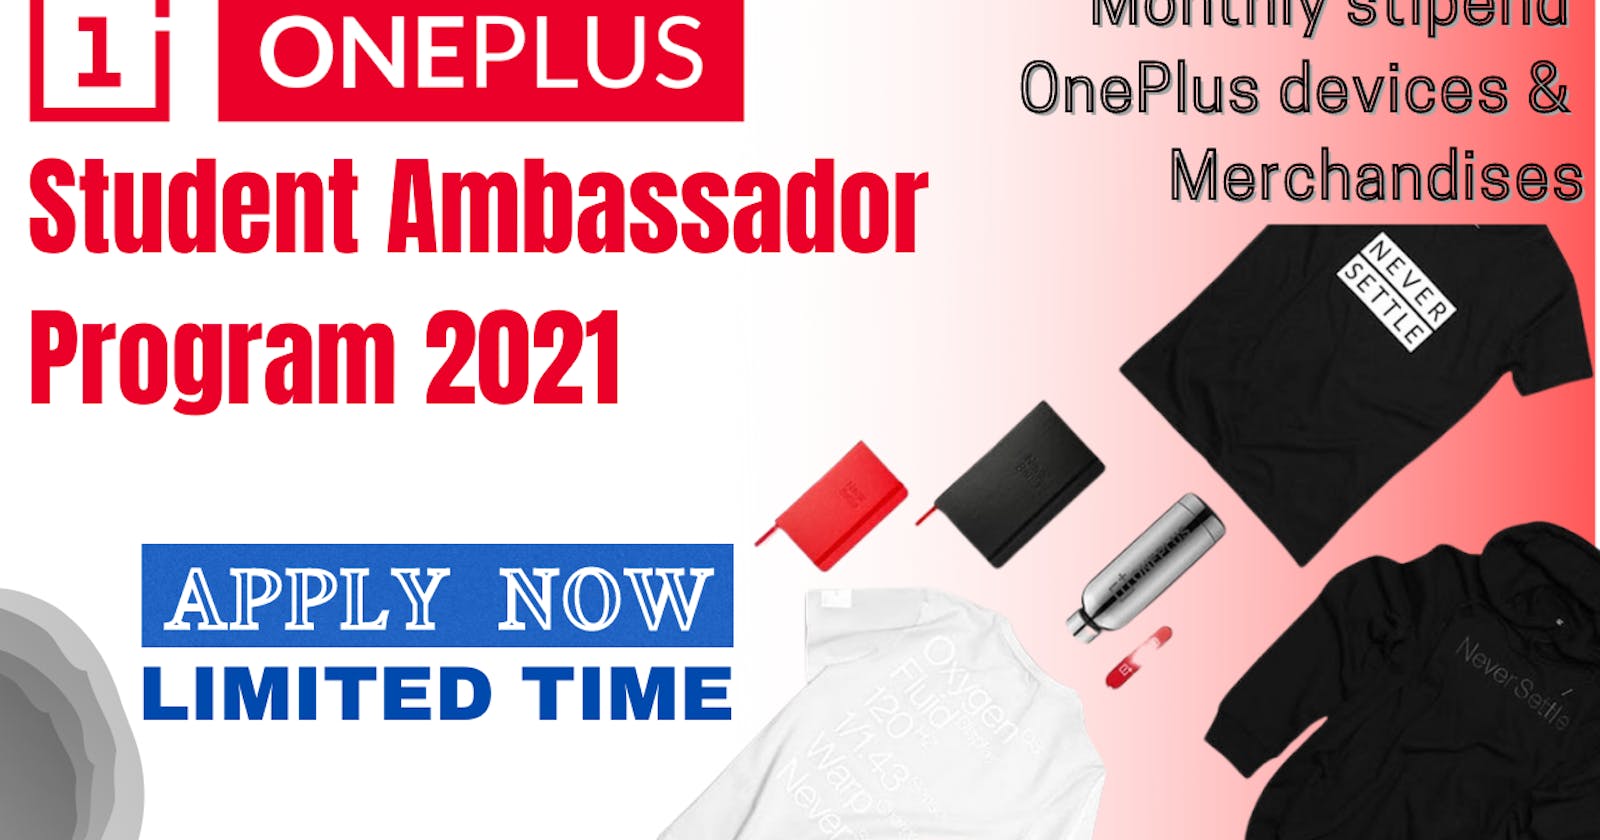 OnePlus Student
Ambassador Program